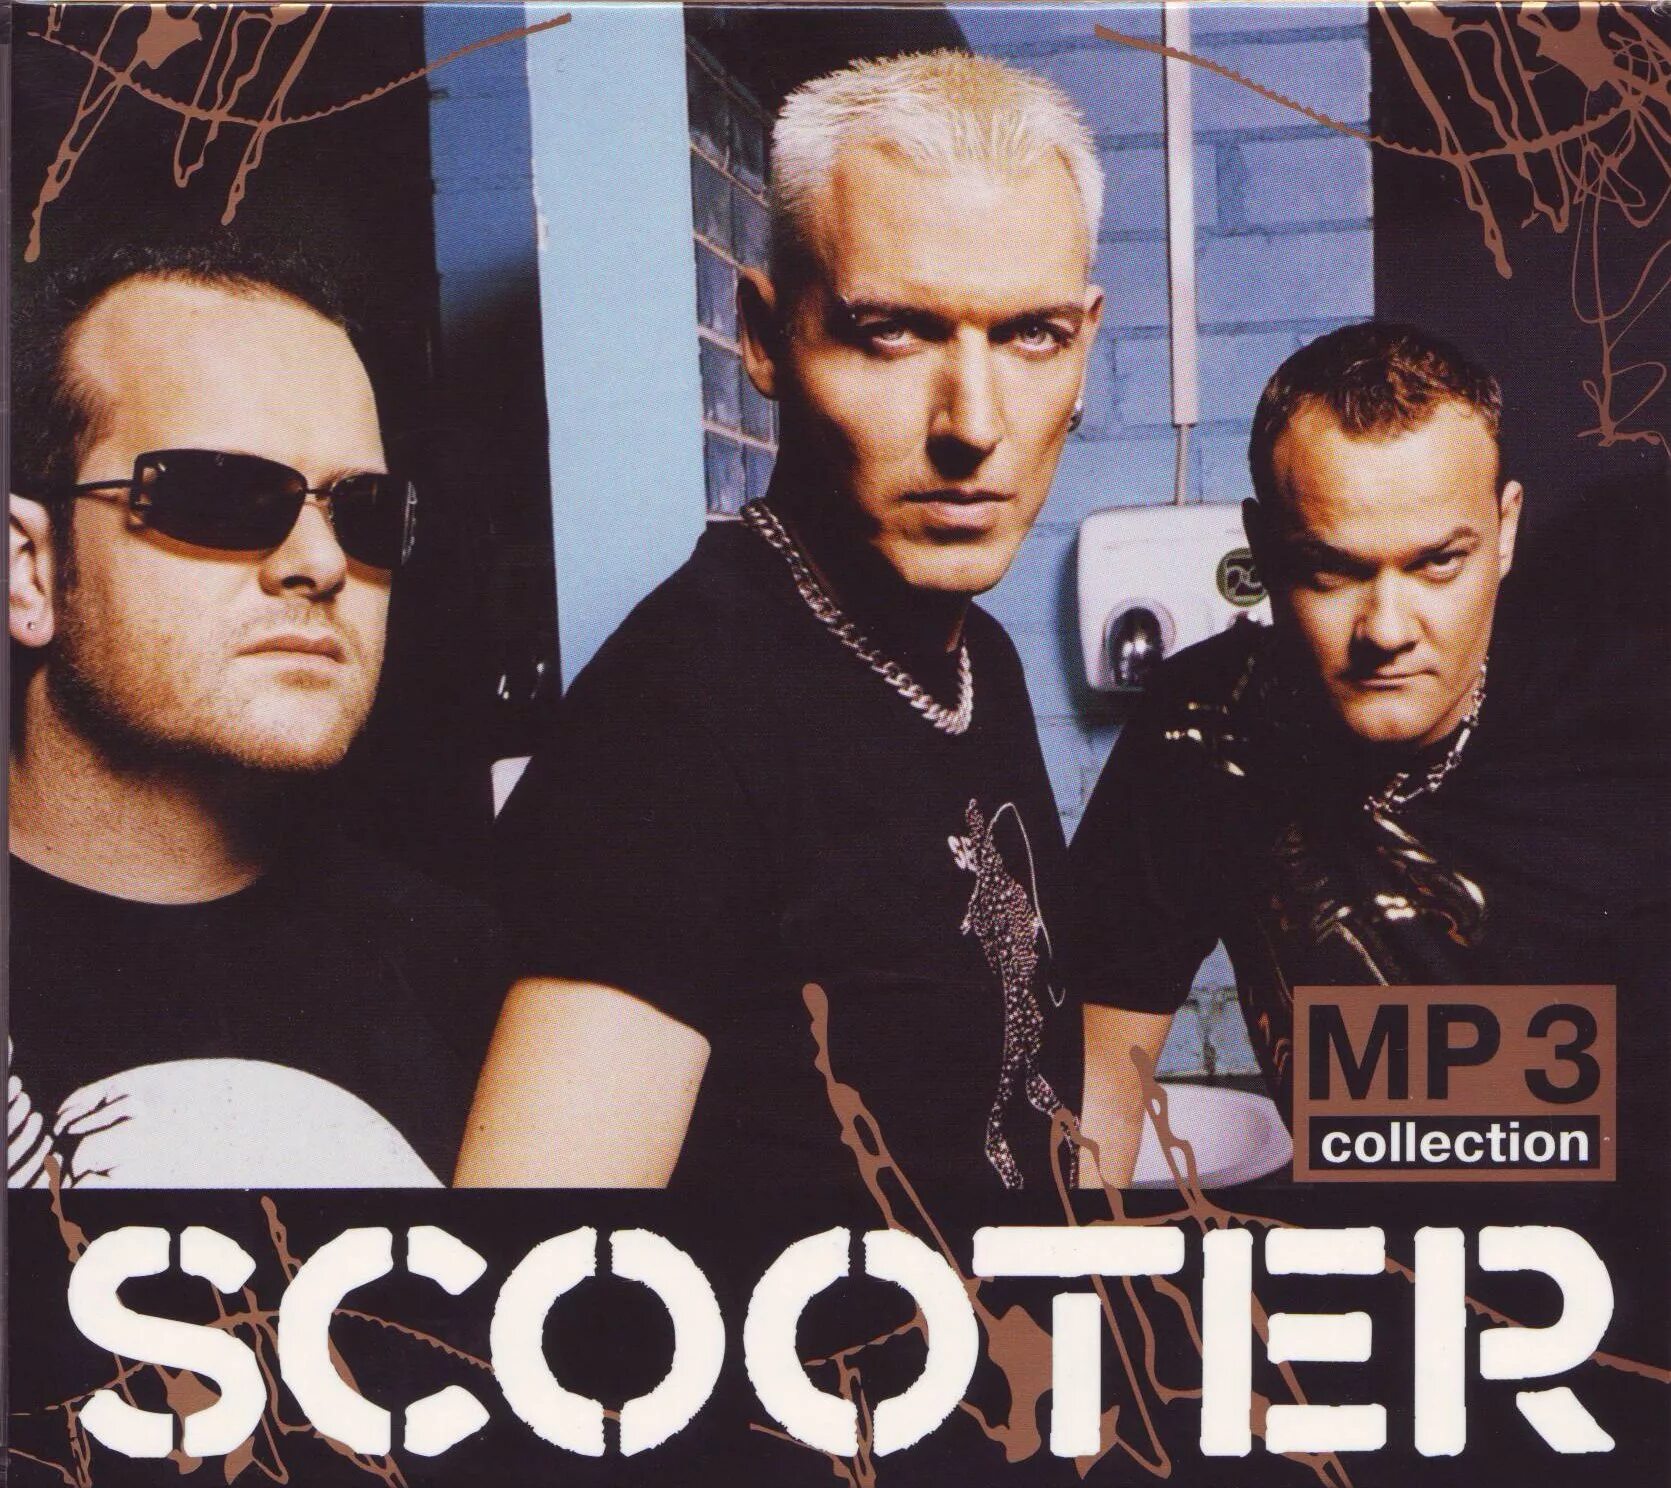 Скутер хиты слушать. Scooter 2000 группа. Scooter мп3 диски 2002. Scooter mp3 компакт диски 1995. Группа Scooter 1998.